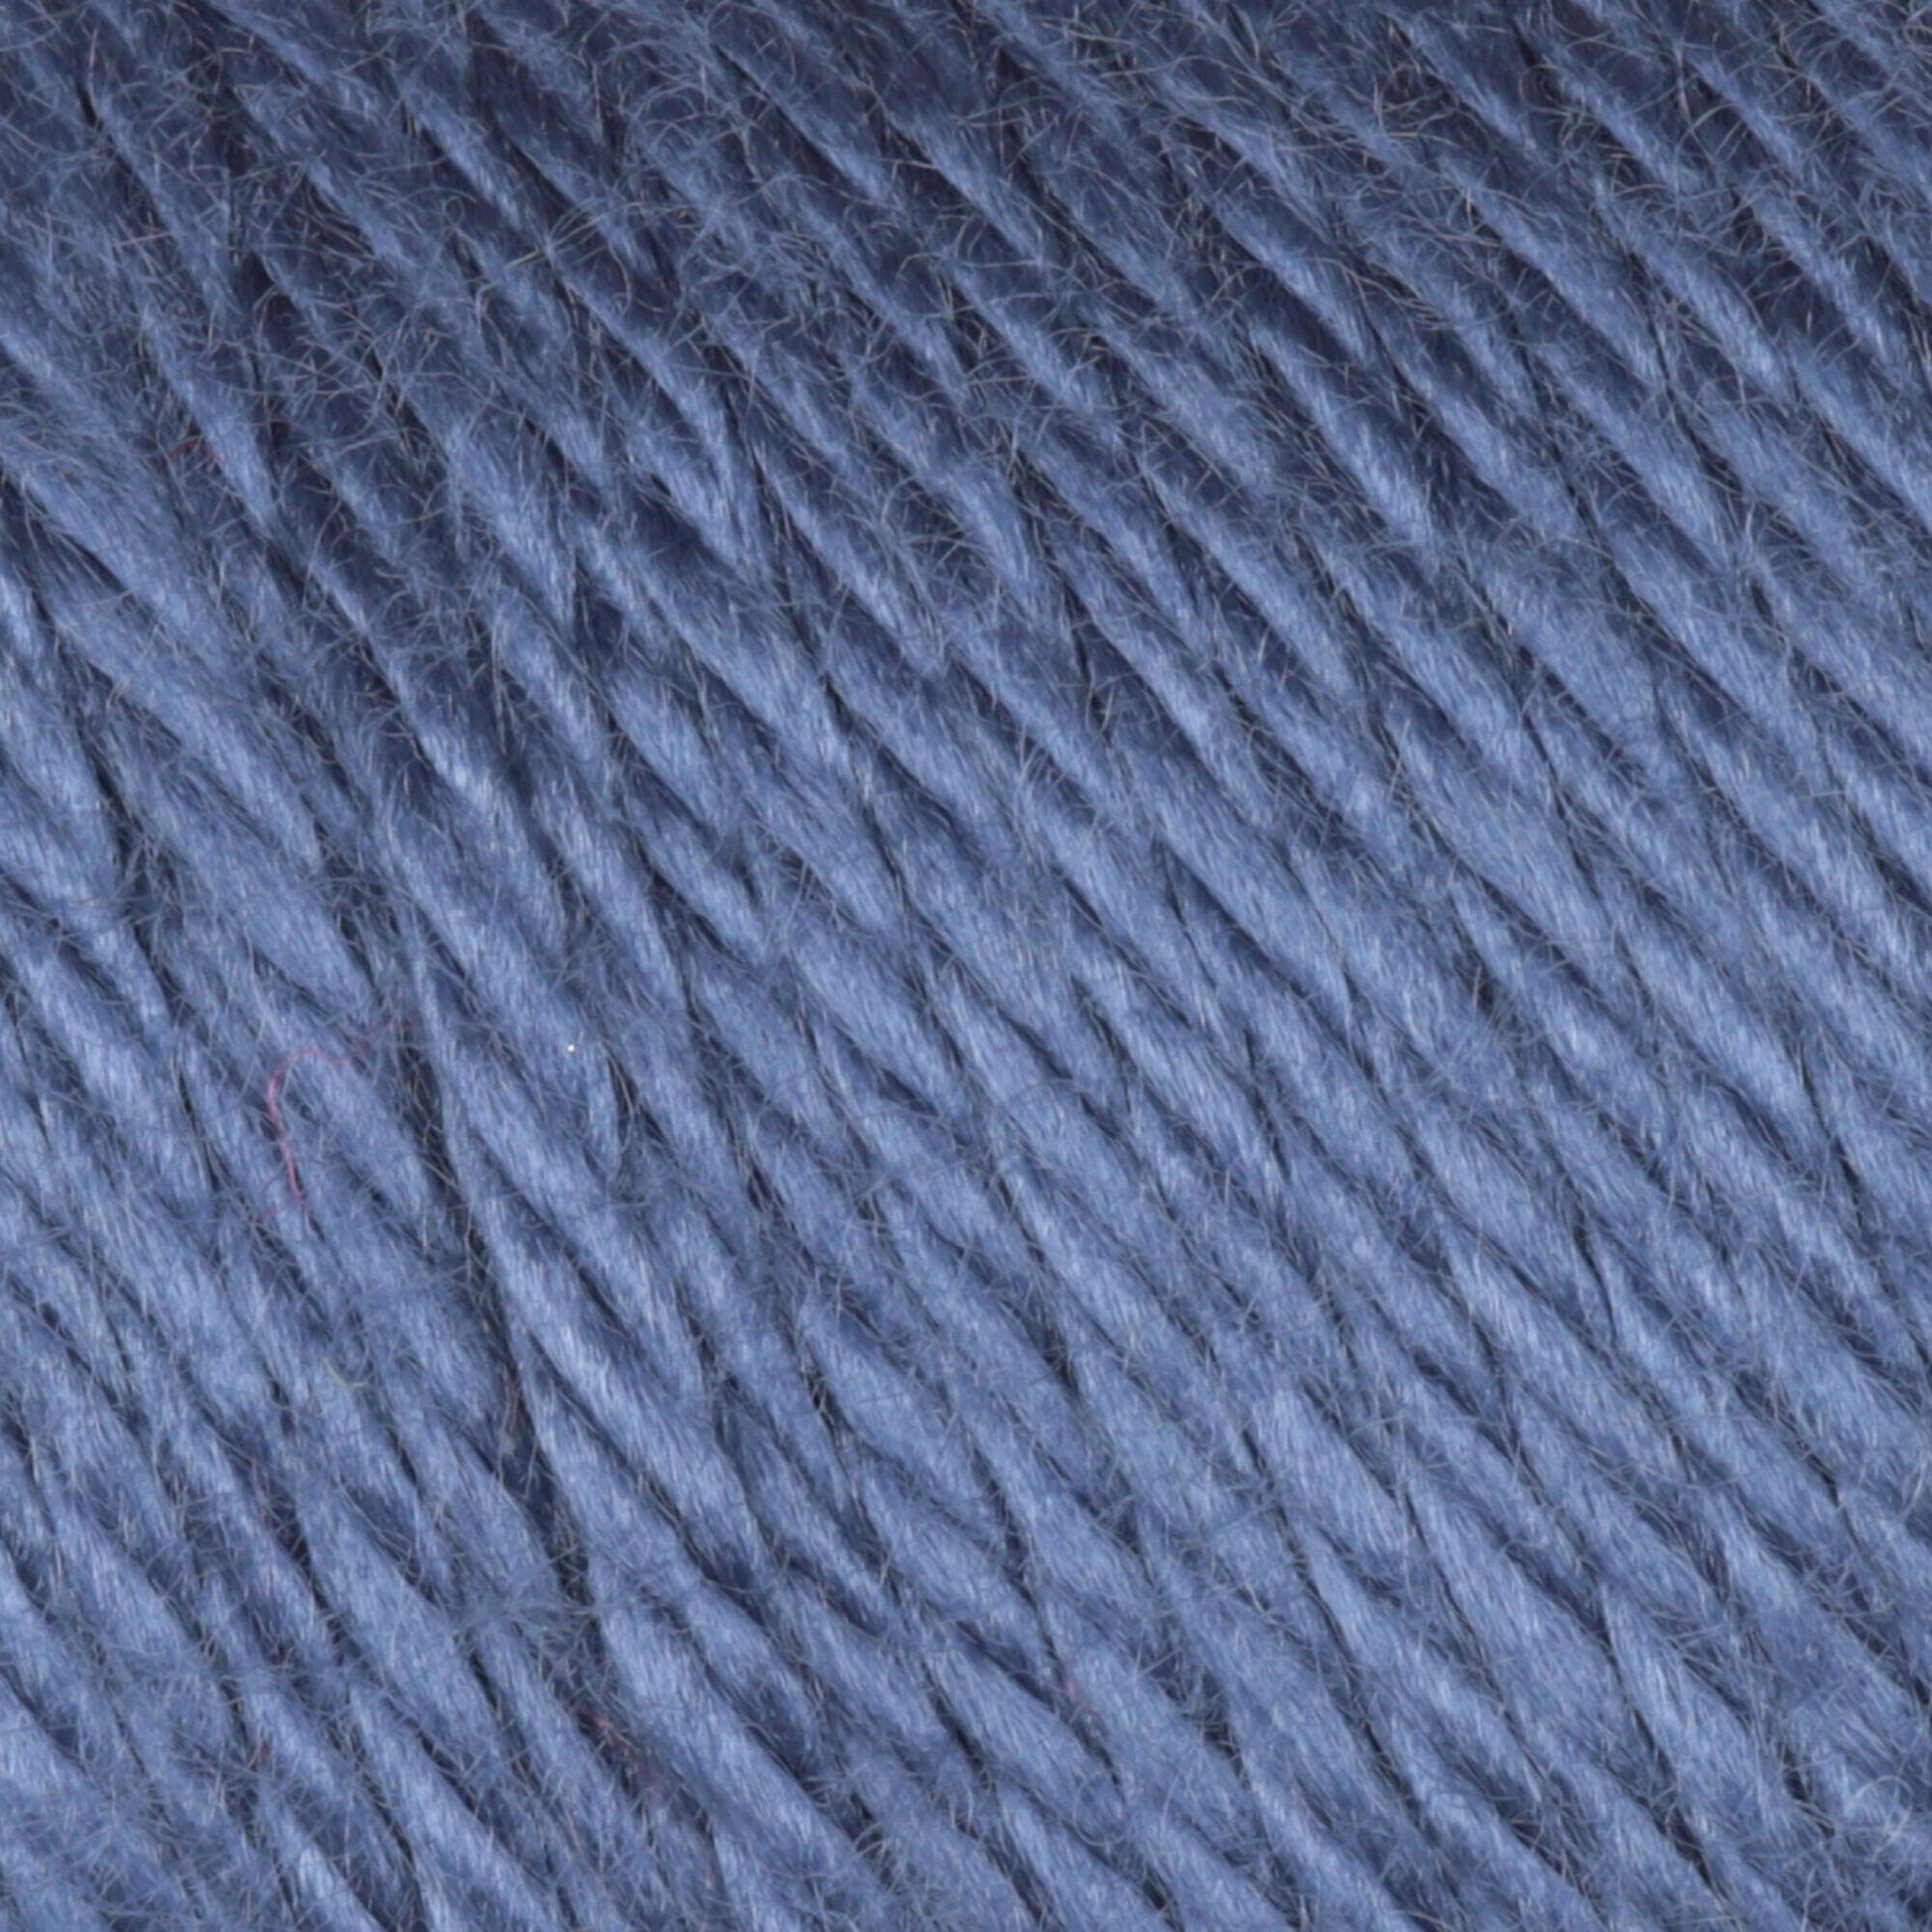 Caron Simply Soft Yarn Country Blue